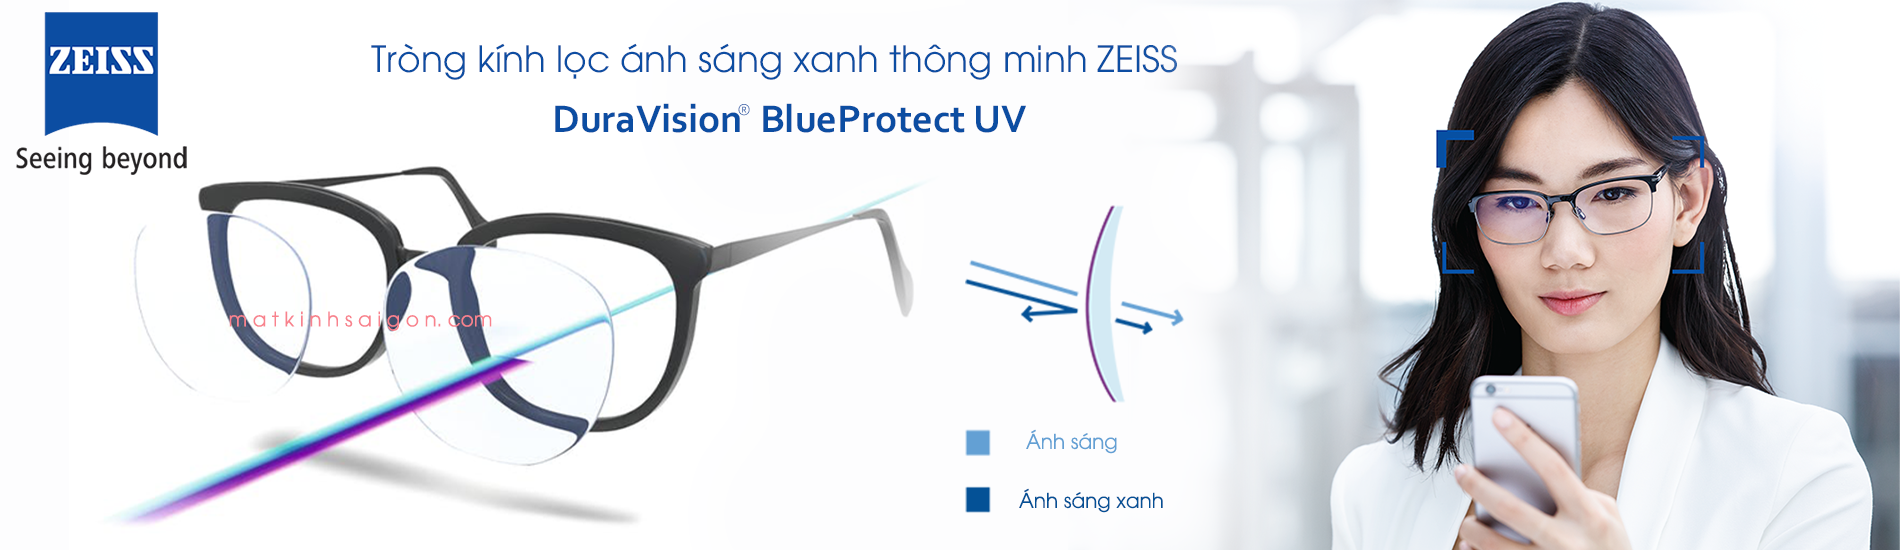 DuraVision BlueProtect UV